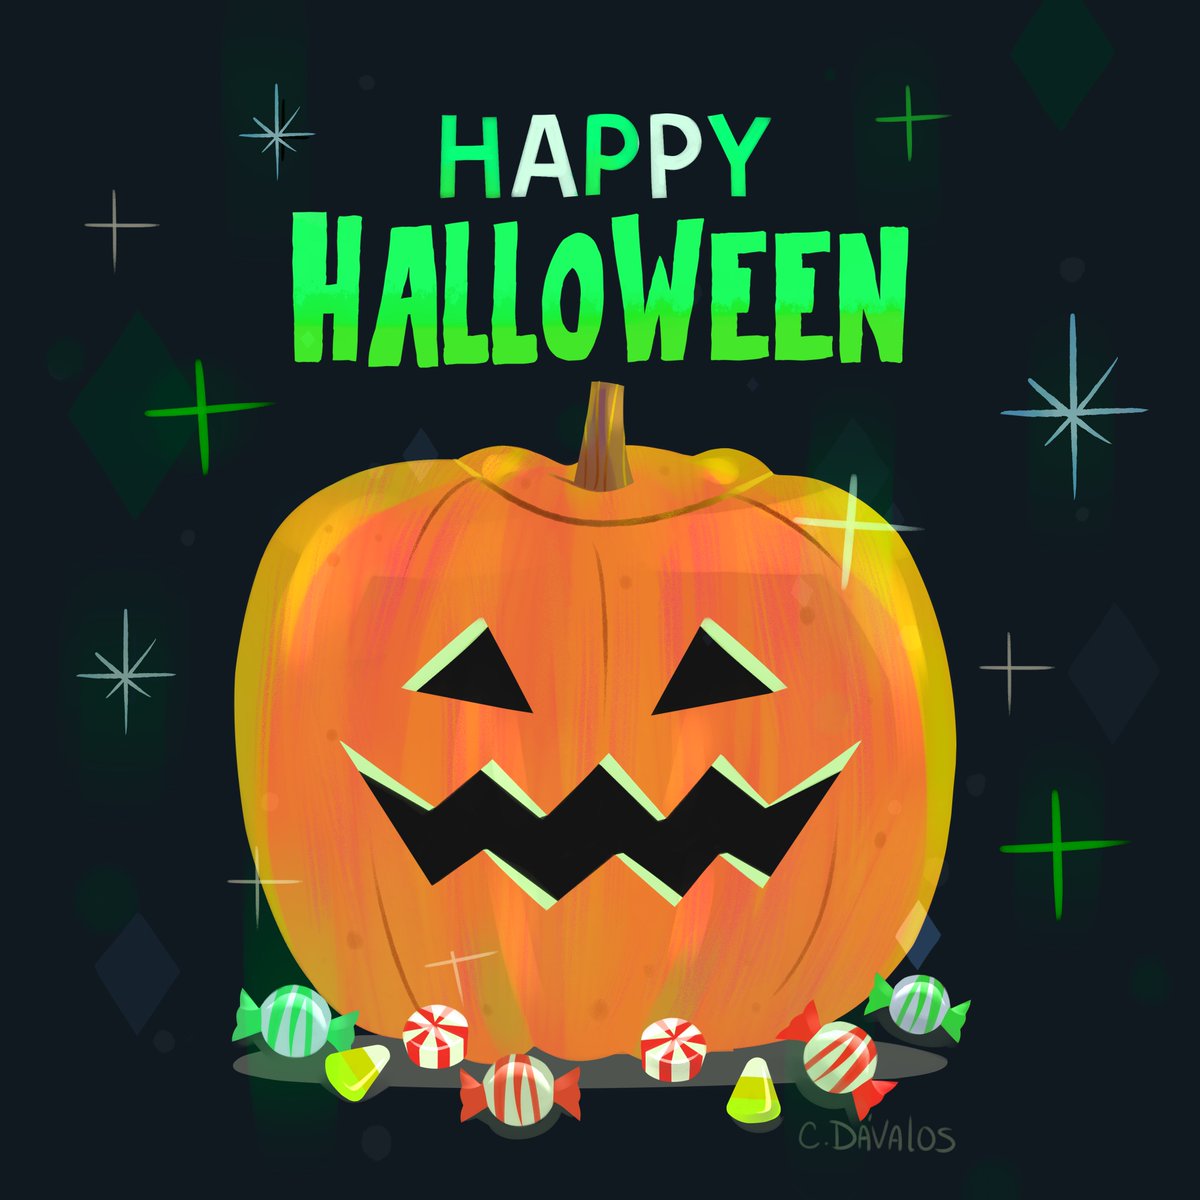 Happy Halloween everyone! 🎃🍁
.
.
.
.
#halloween #happyhalloween #halloweenart #halloweenillustration #halloween2020 #allhallowseve #halloweendrawing #illustrationart #happyhalloween🎃 #fantasydrawing #fantasyartwork #drawingfantasy #magicdrawing #magicart #draws #drawing